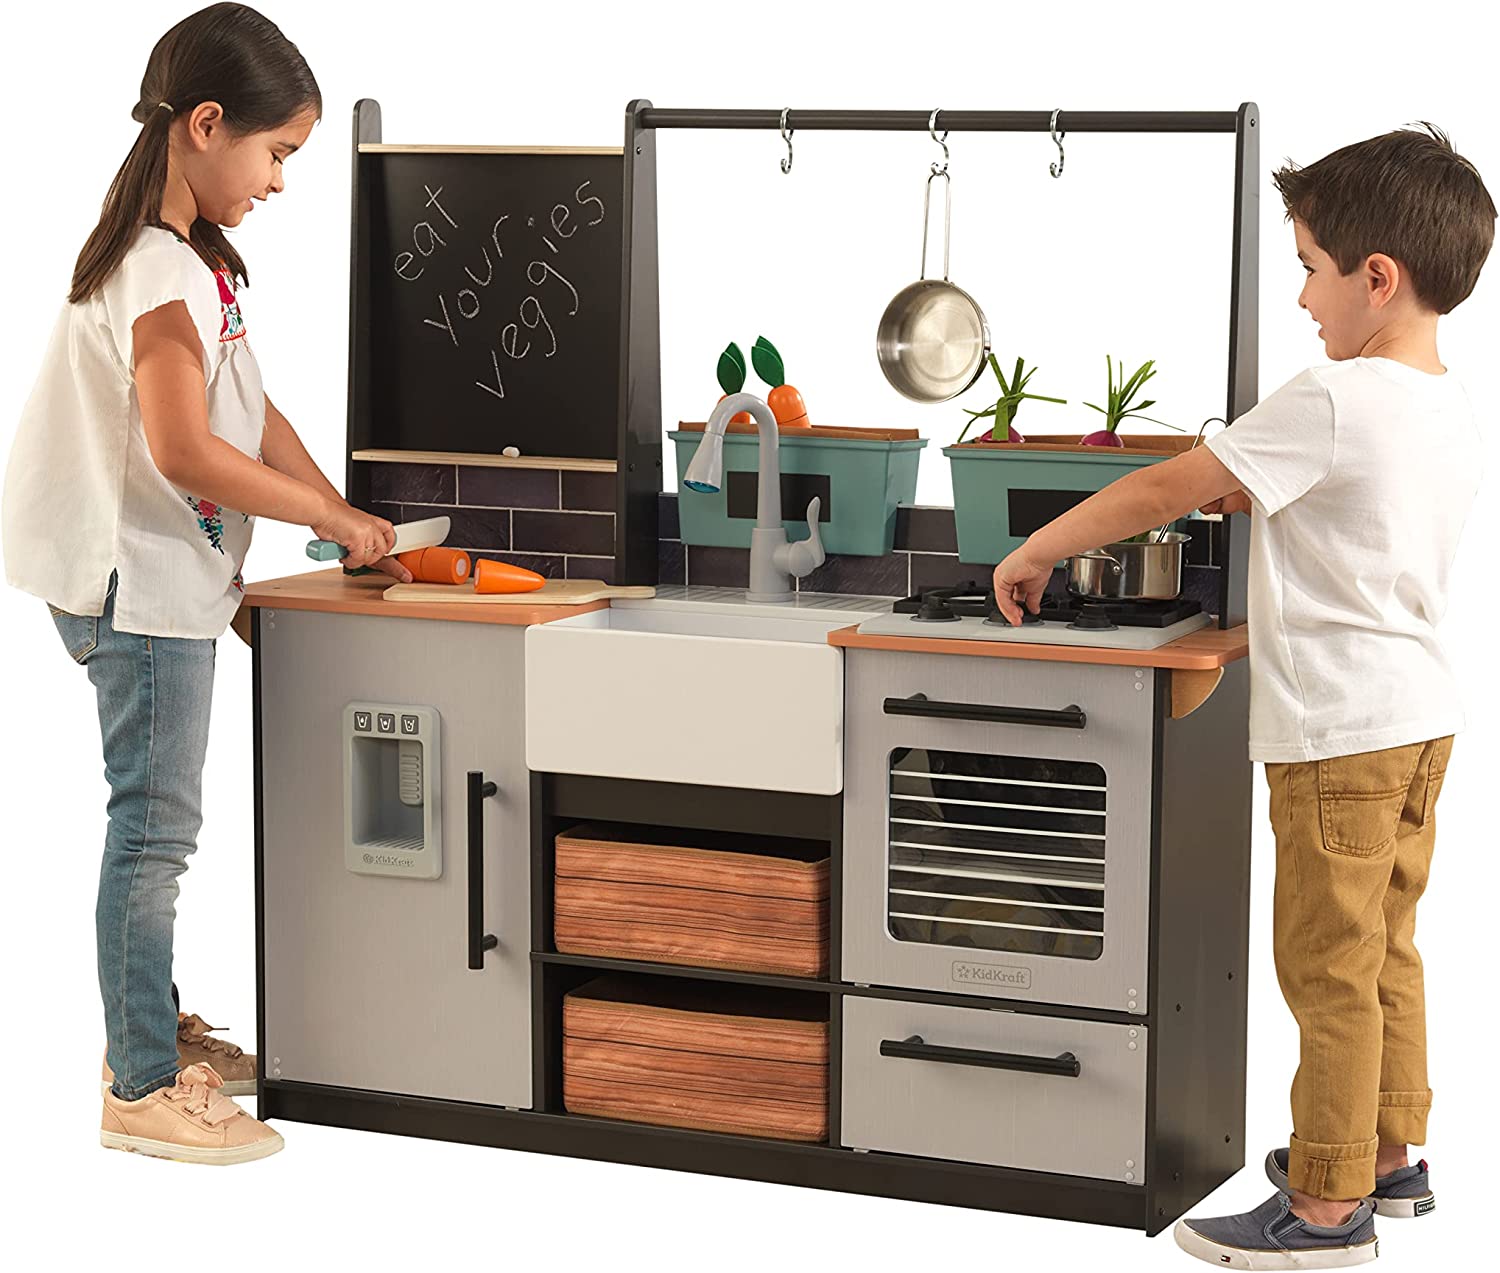 KidKraft Garden-To-Plate Play Kitchen For Kids